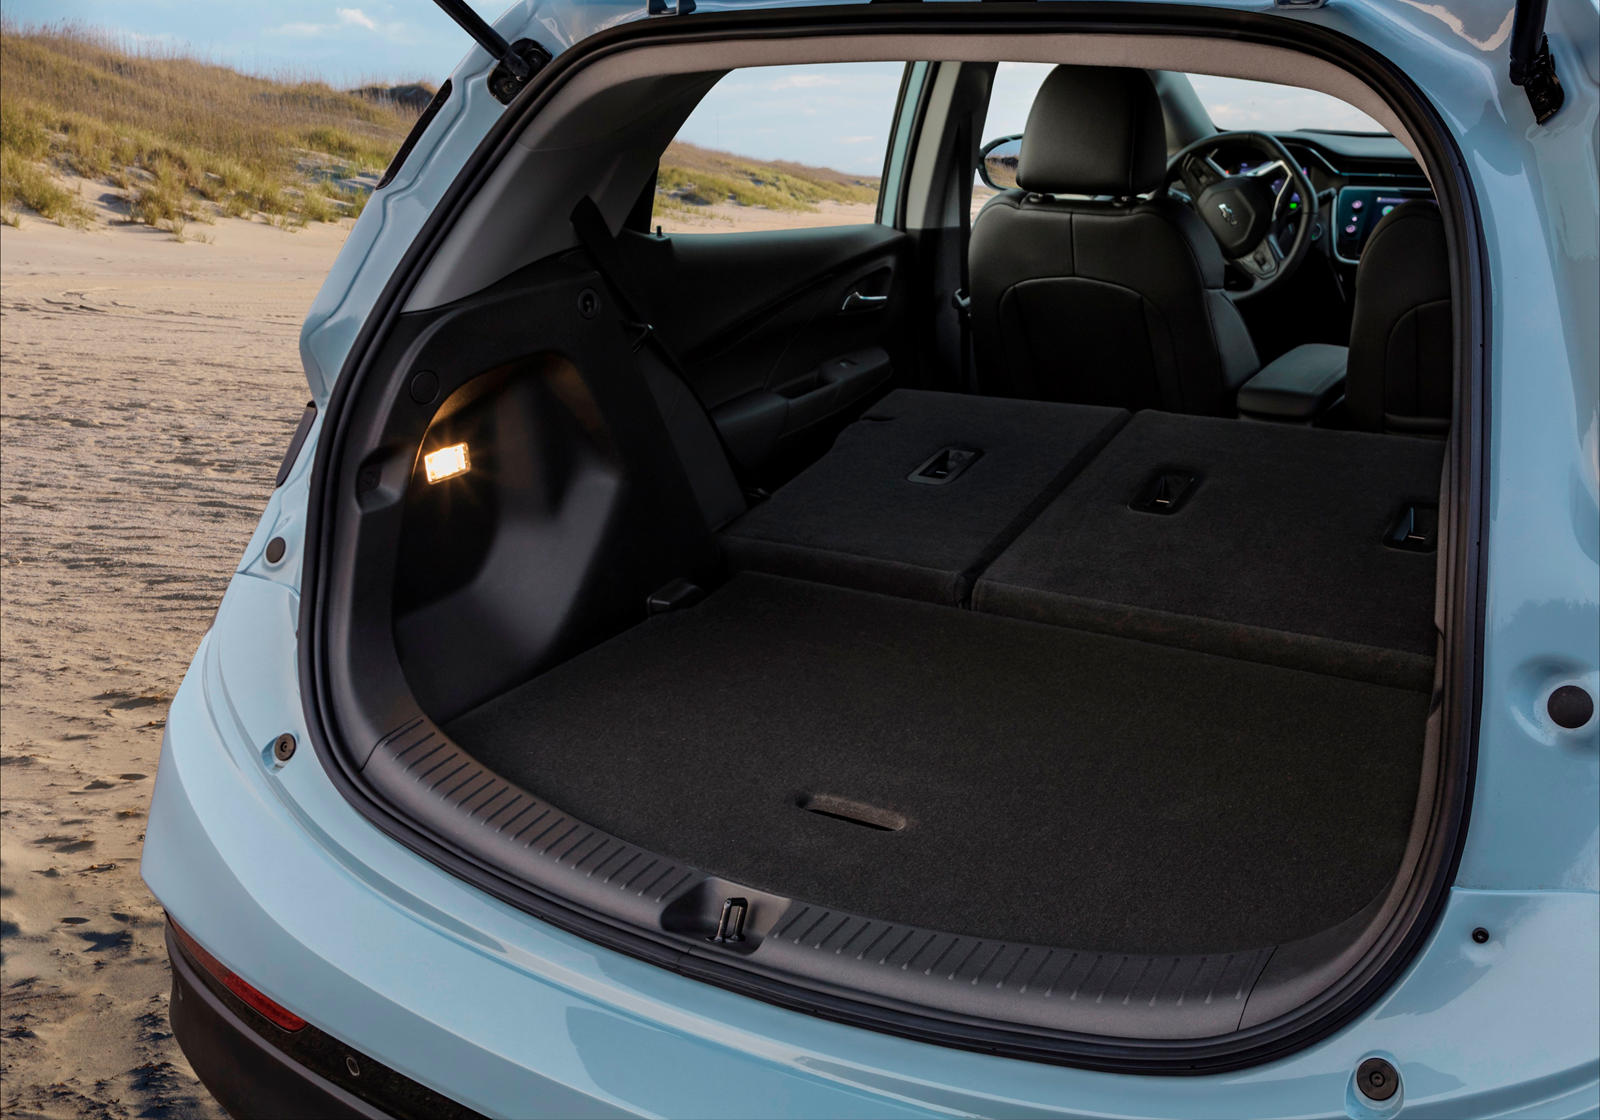 2023 Chevrolet Bolt EV Interior Dimensions: Seating, Cargo Space